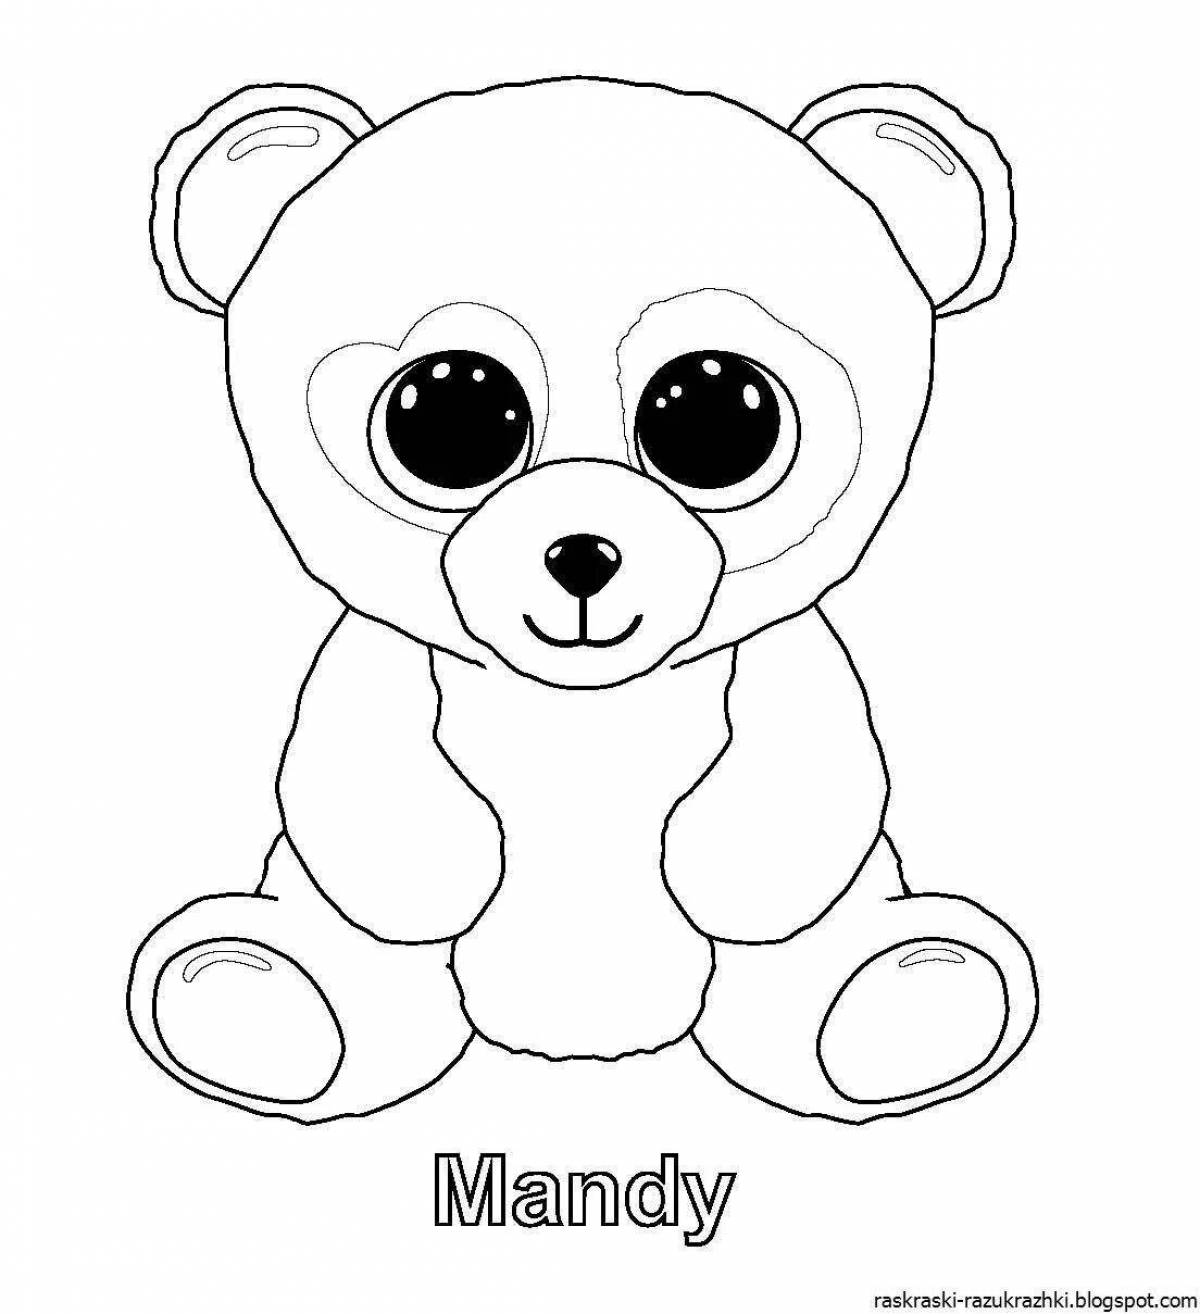 Coloring book fluffy cute teddy bear